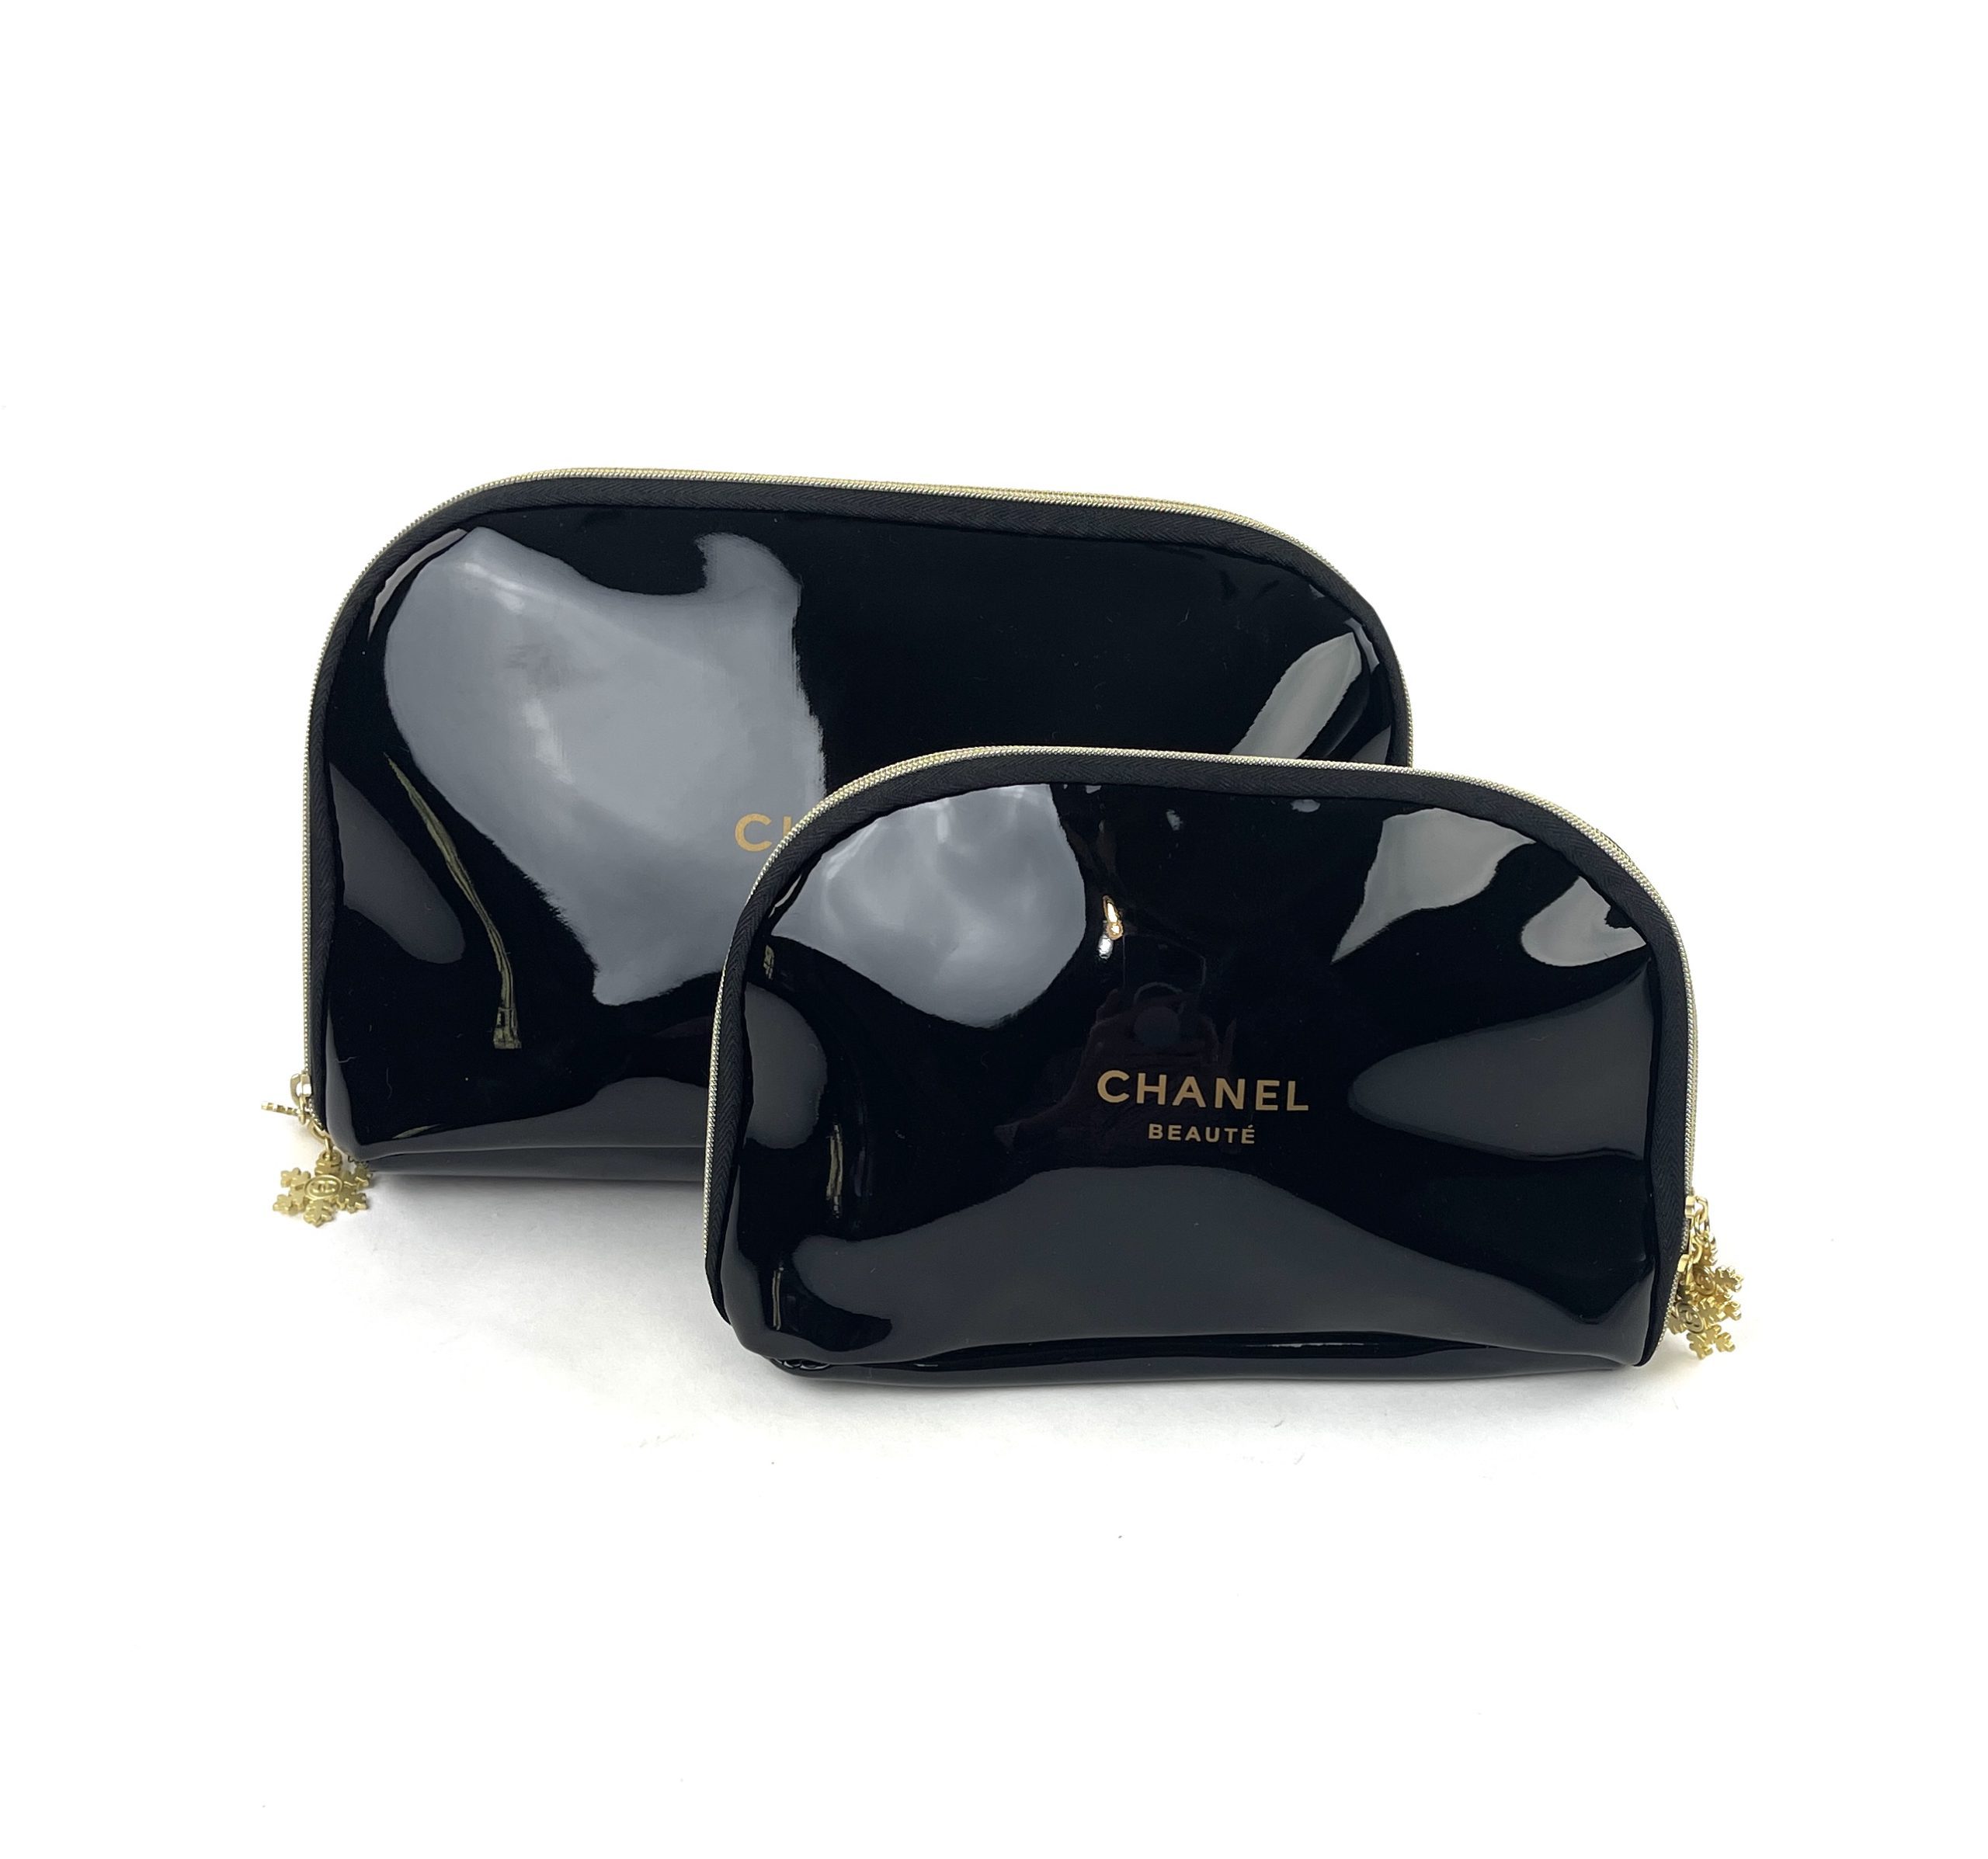 Chanel Black Maquillage Beauty Cosmetics Makeup Bag